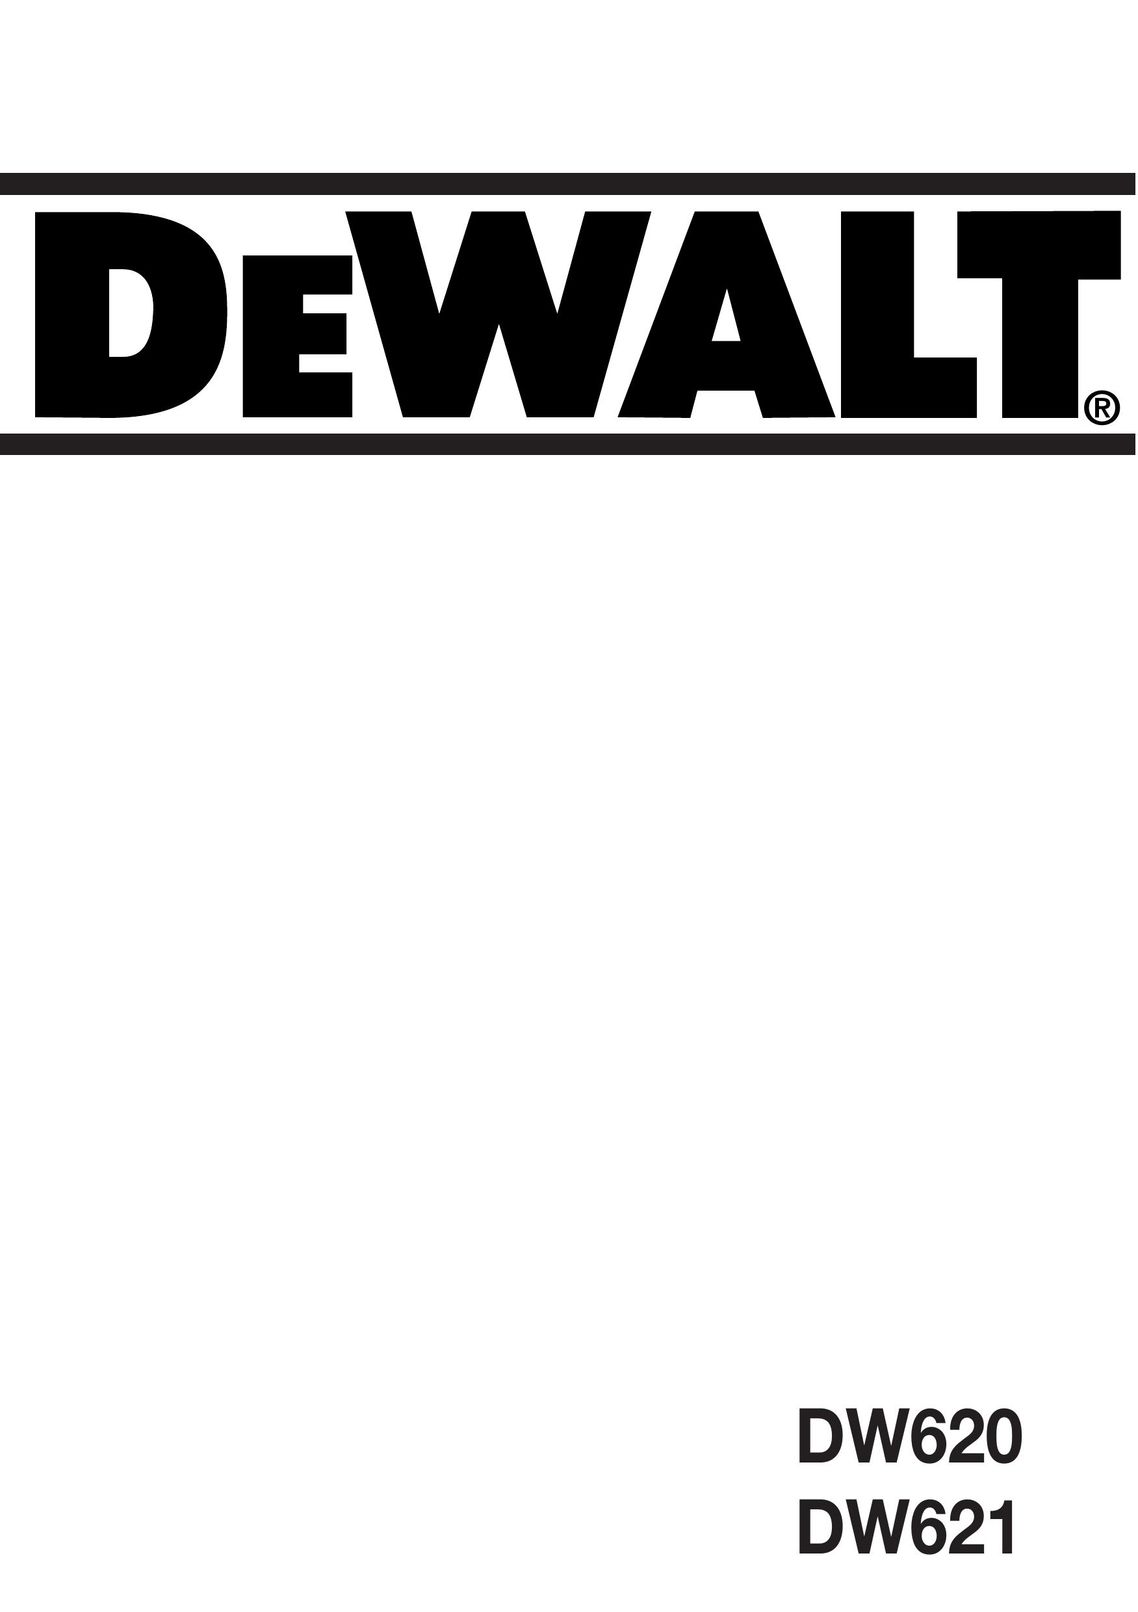 DeWalt DW621 Router User Manual